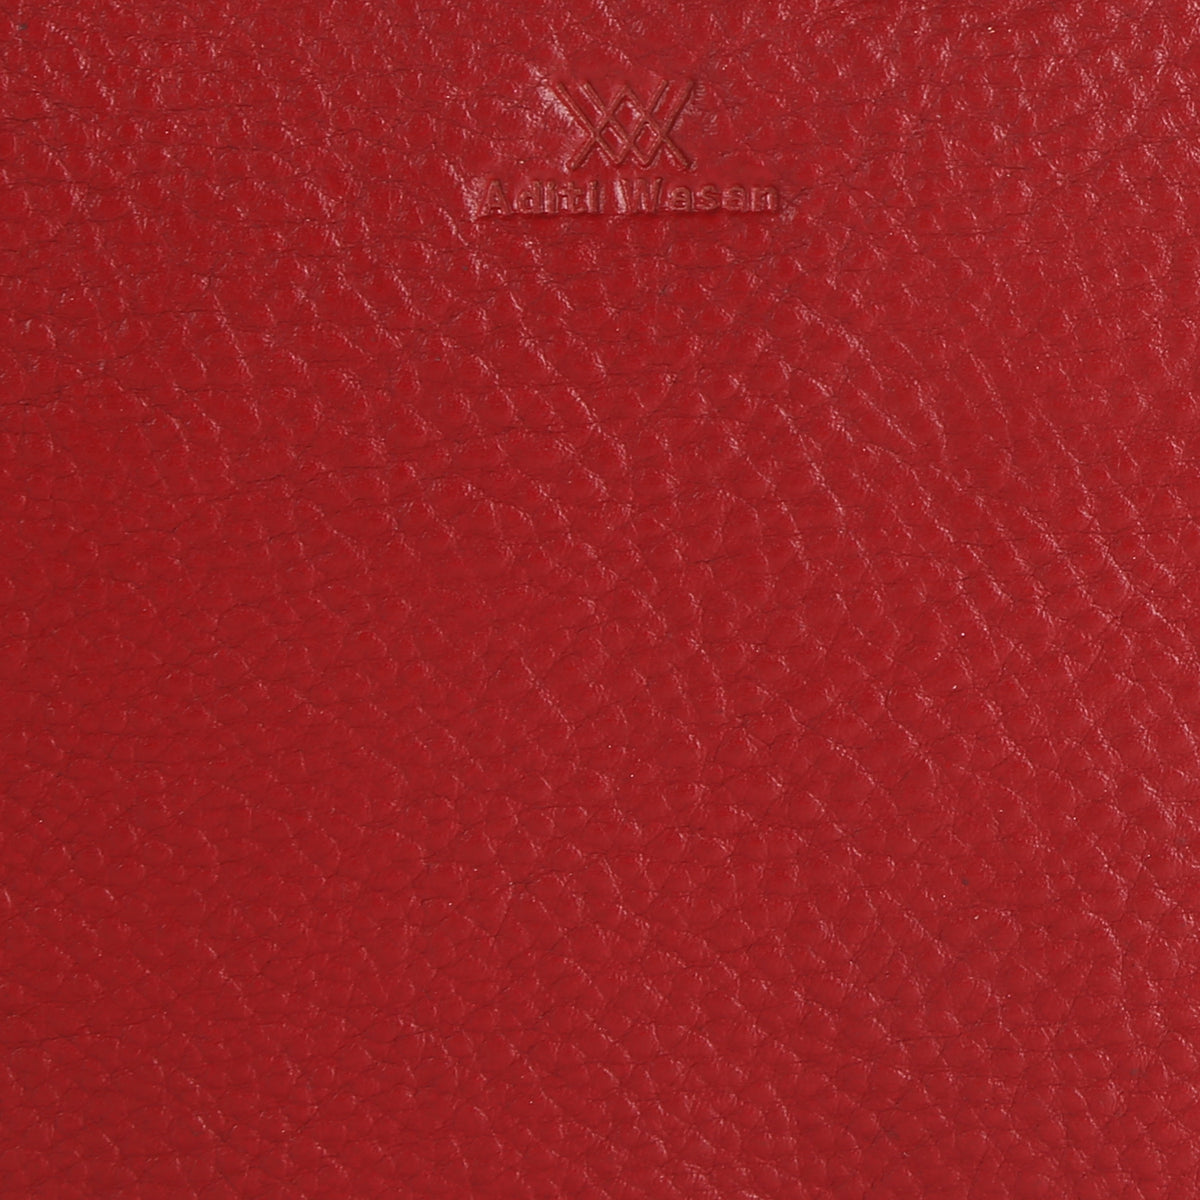 Aditi Wasan Women Casual Maroon Genuine Leather Wallet